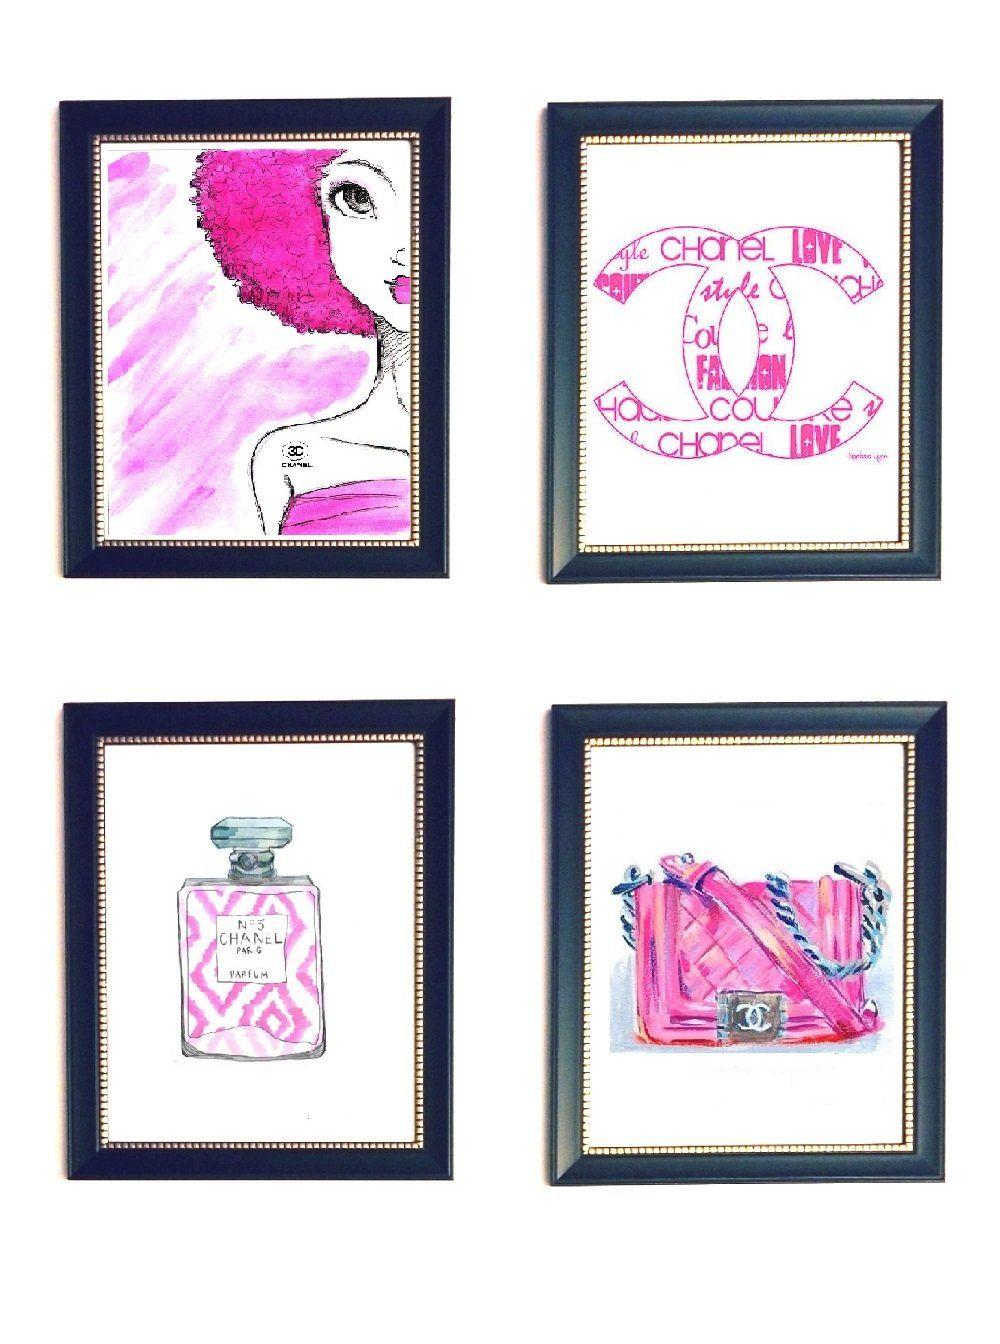 Chanel Number 3 Logo - Chanel Online Hot Pink Fuchsia Funn Chanel Bottle Art Set Chanel ...